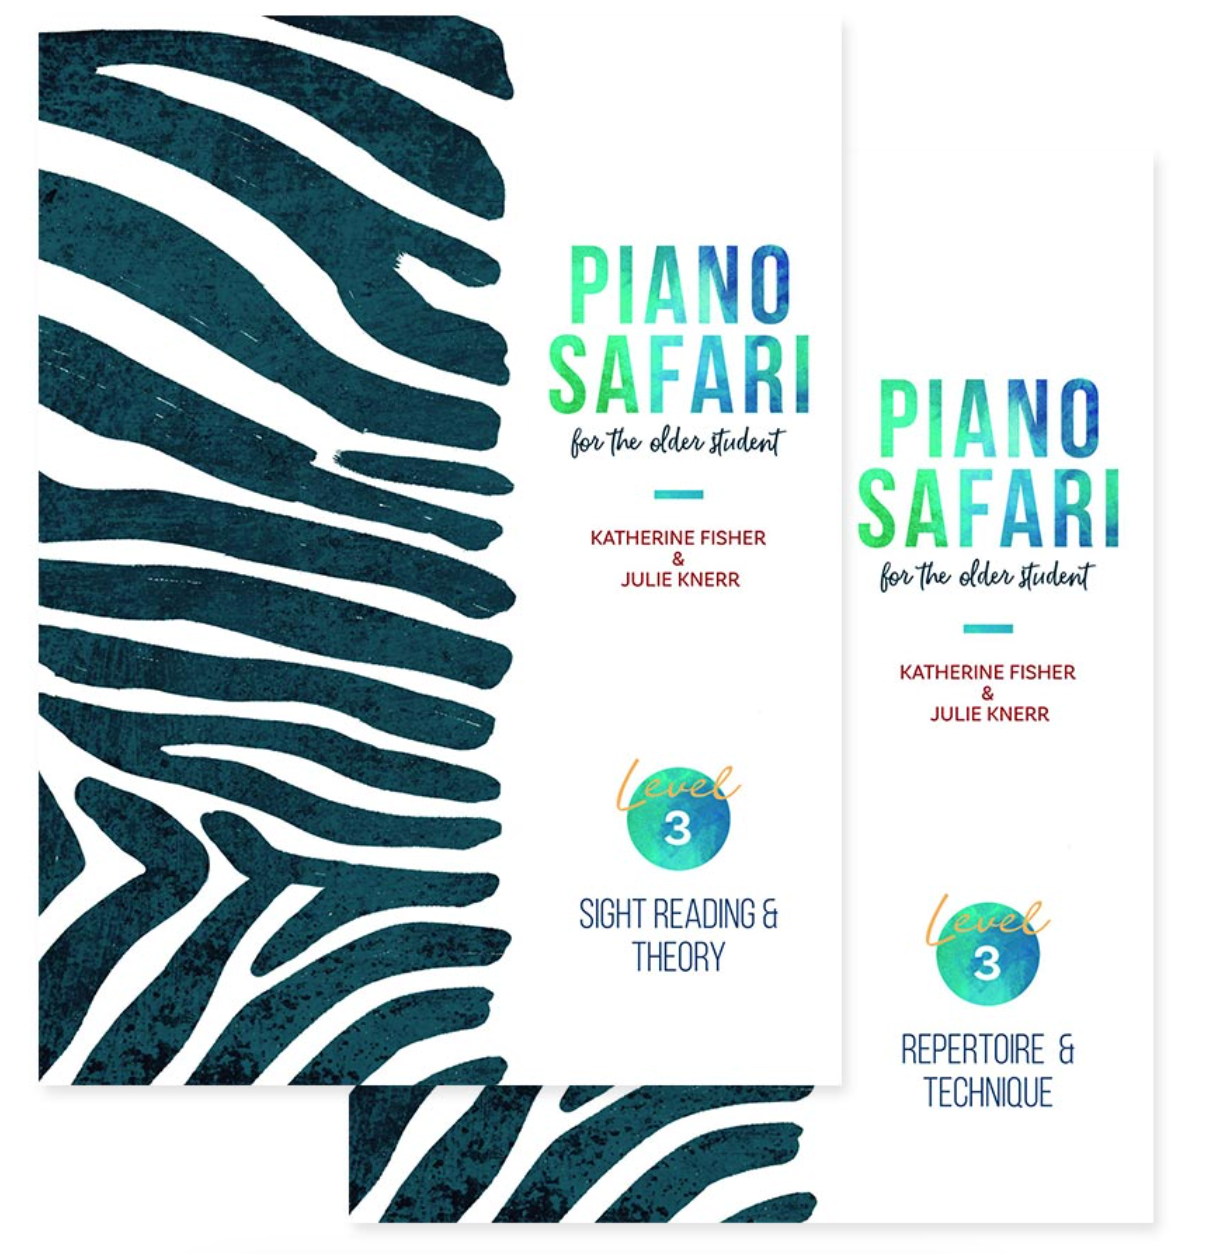 Piano Safari Older Student 3 Pack - Fisher Katherine; Hague Julie Knerr Piano Safari PNSF1055